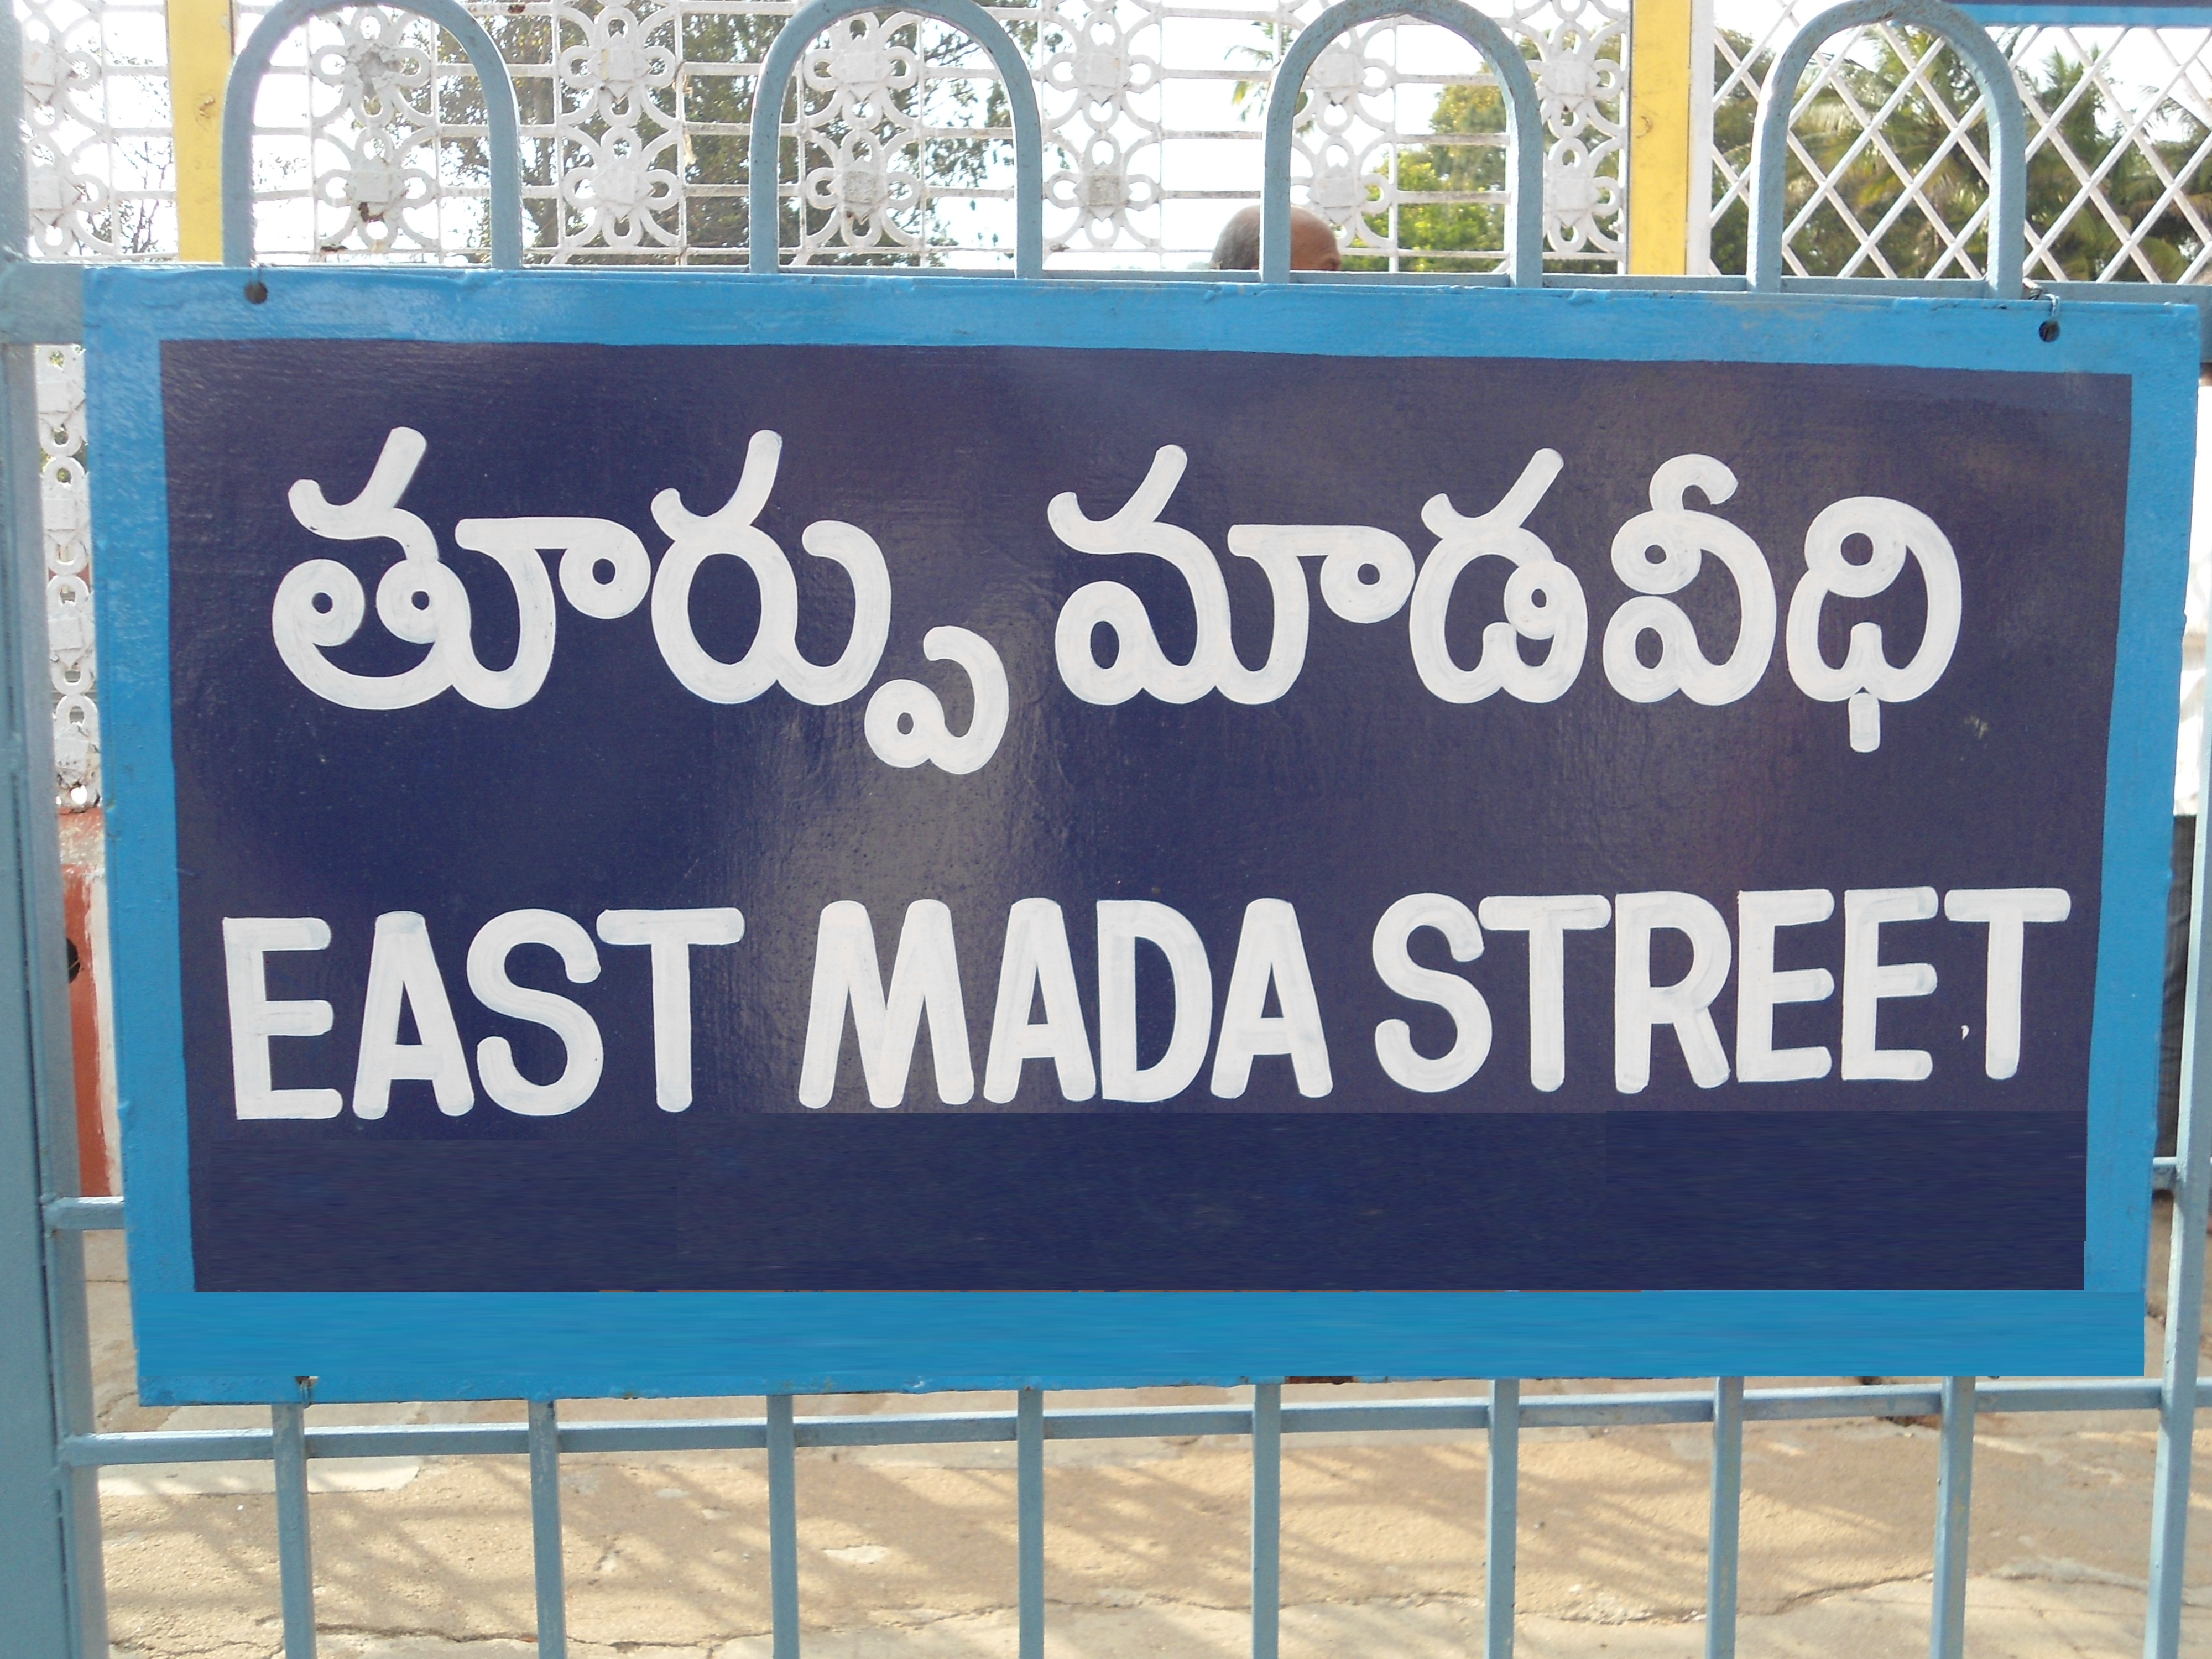 East Mada Street (తూర్పు మాడ వీధి)